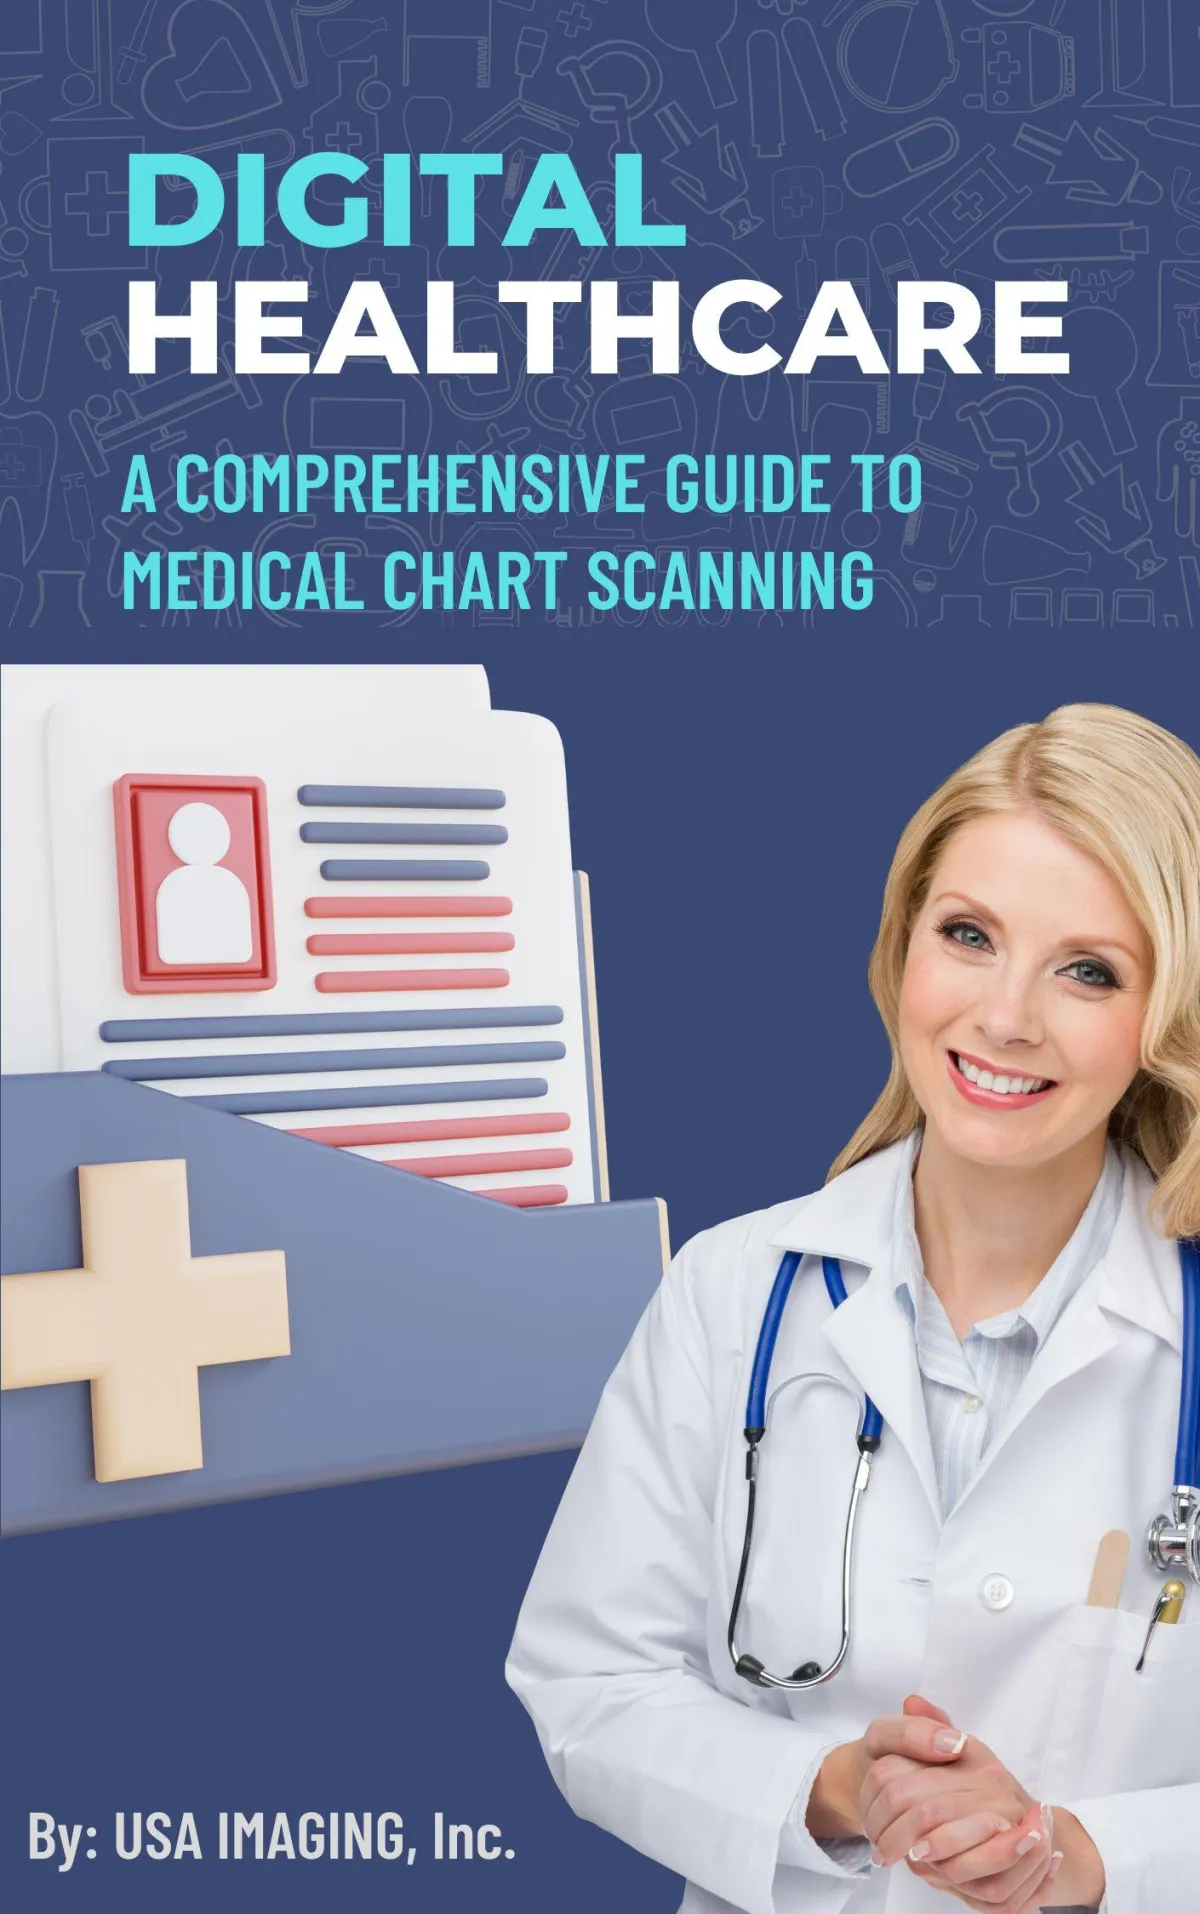 Digital Healthcare Guide